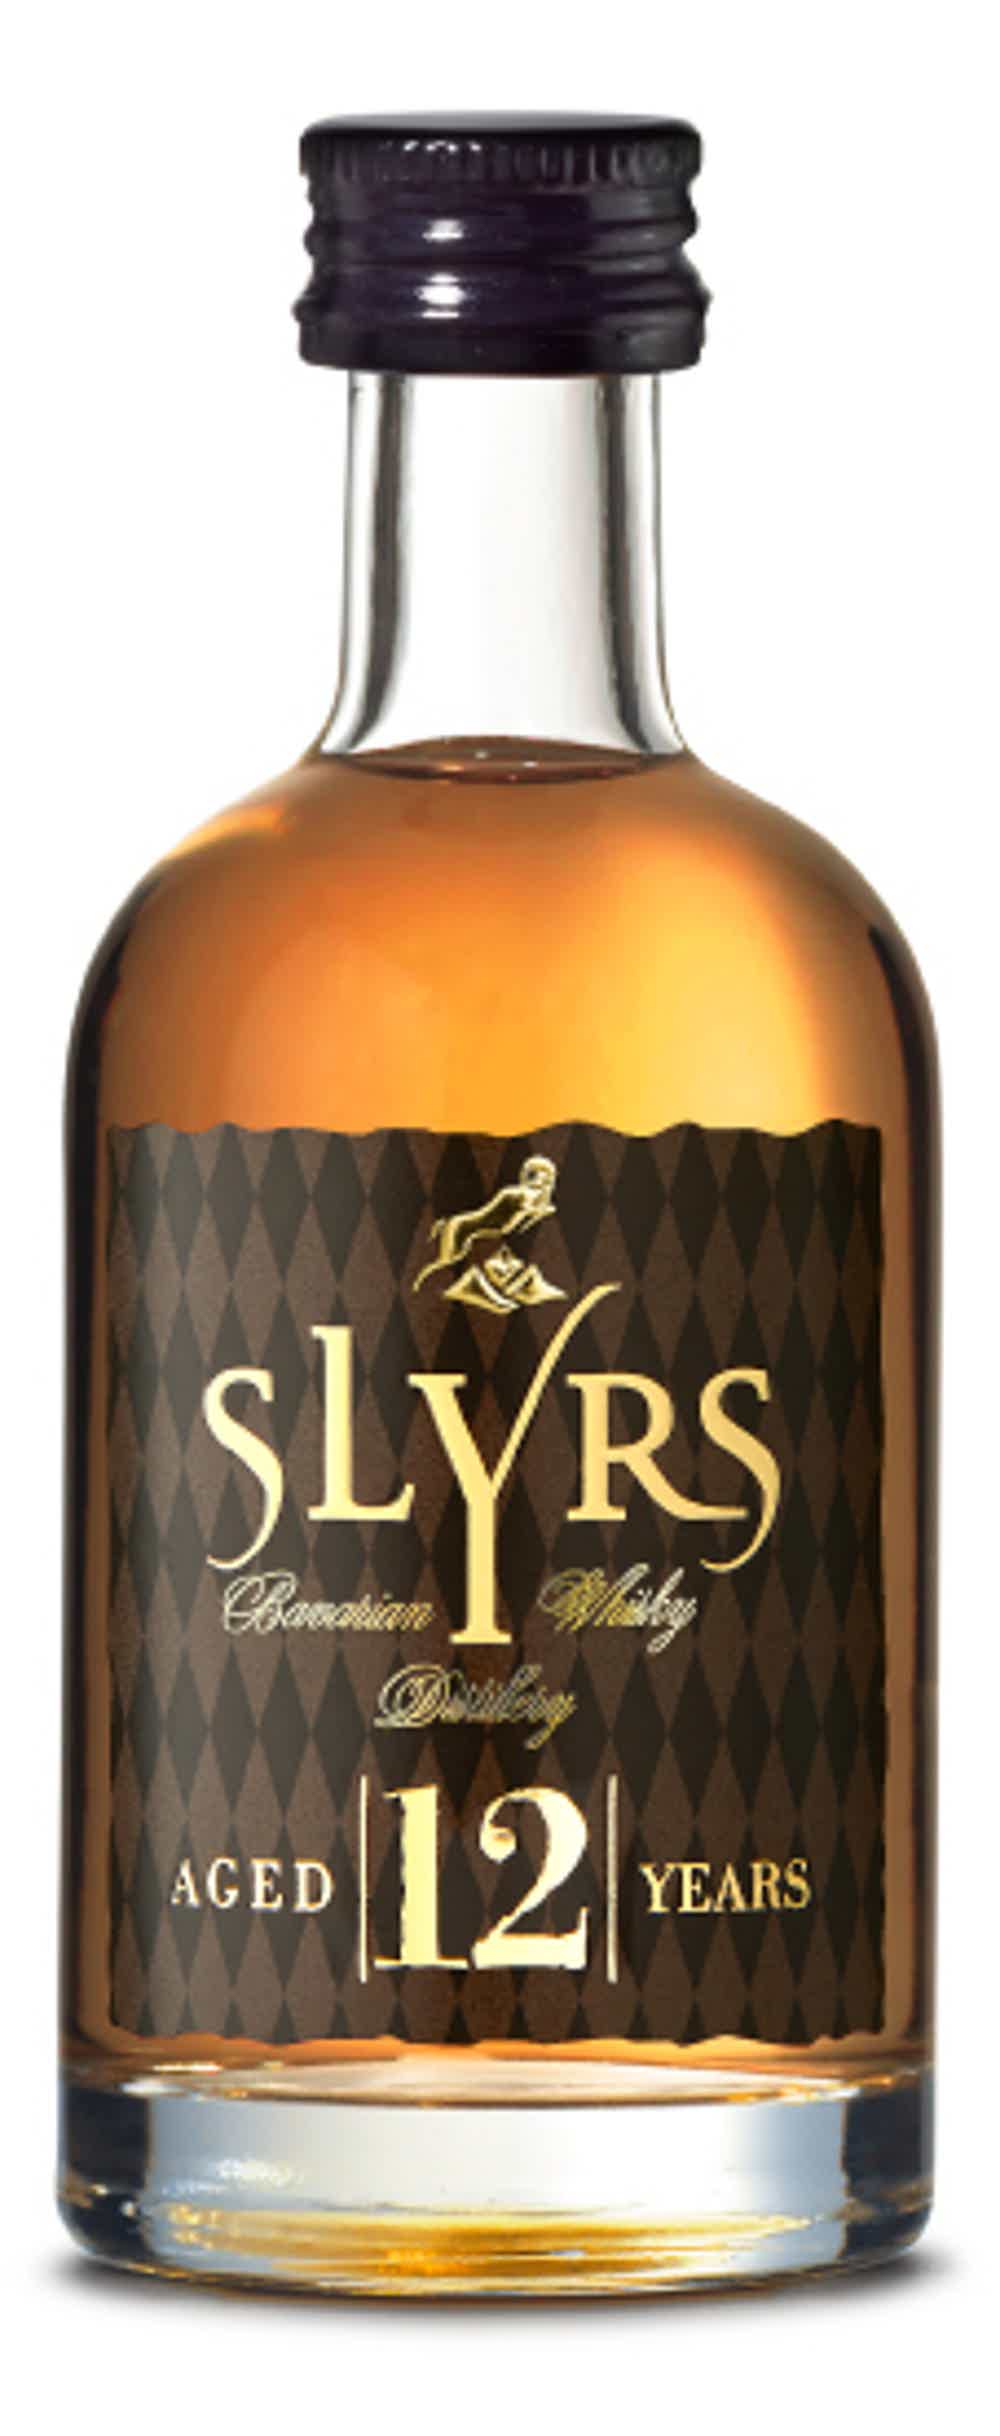 SLYRS Single Malt Whisky Aged 12 Years 43% vol. 43.0% 0.05L, Spirits